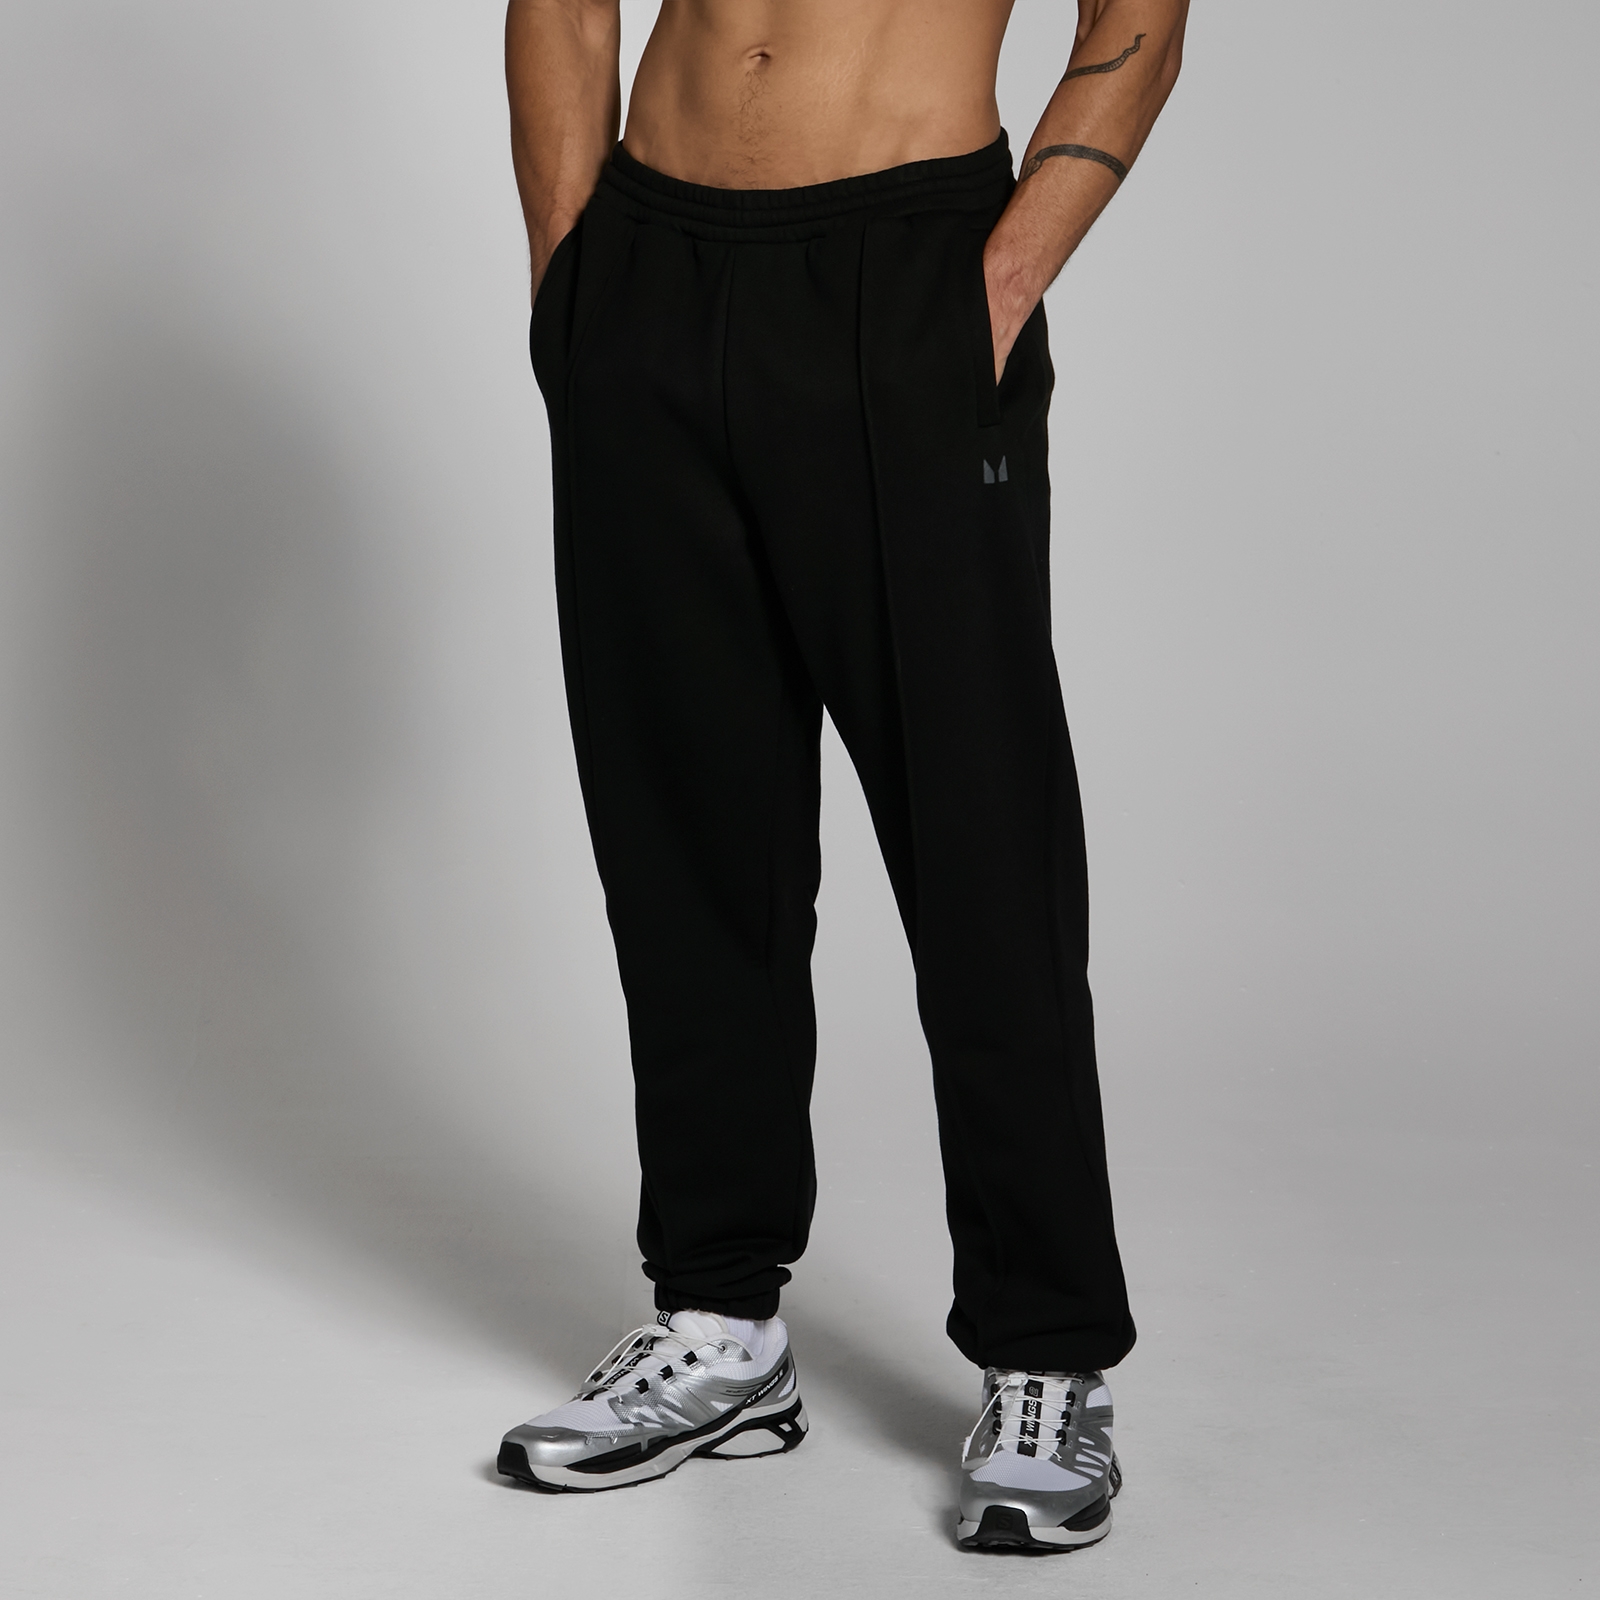 Image of Pantaloni da jogging pesanti oversize MP Lifestyle da uomo - Neri - M